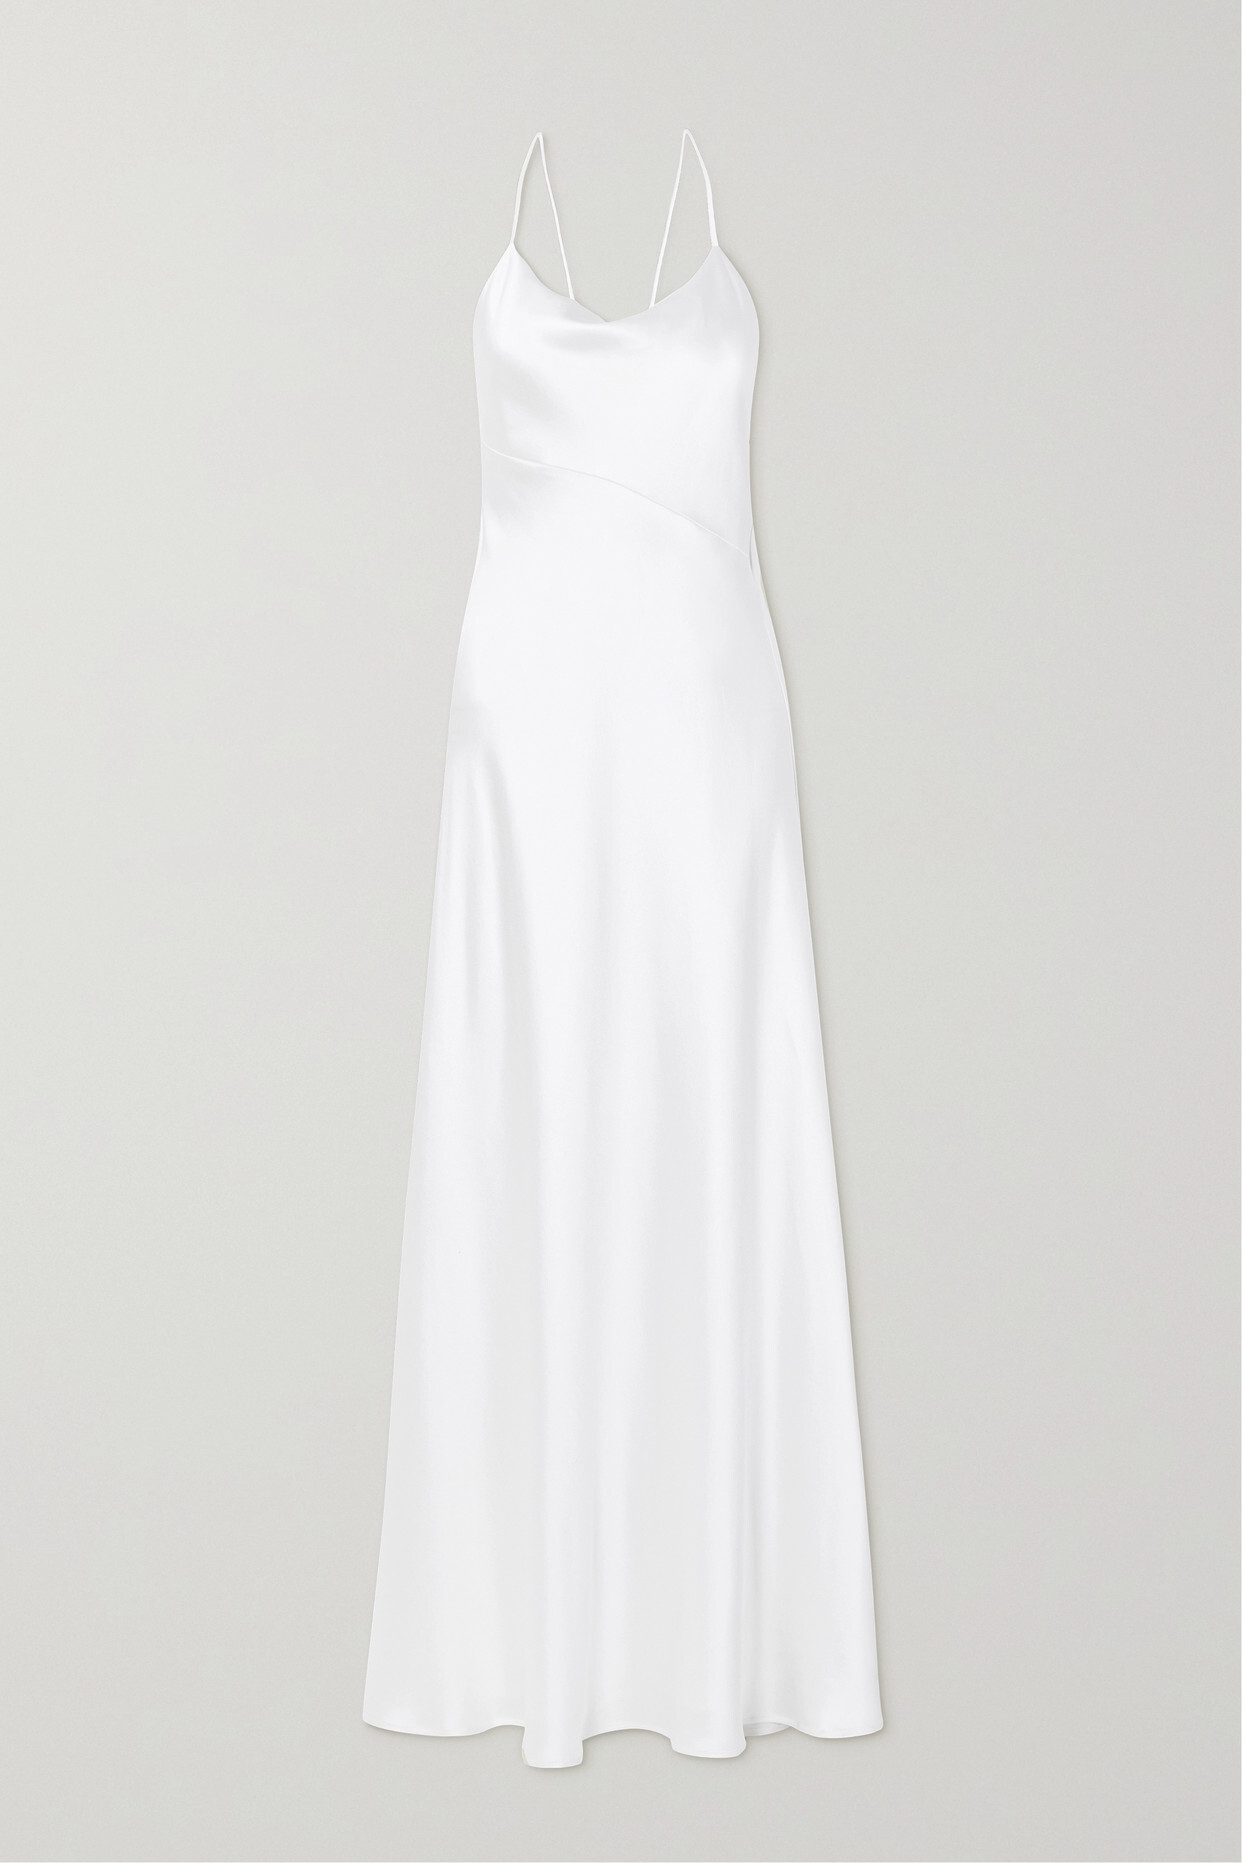 Galvan - Spetses Open-back Silk-satin Gown - White